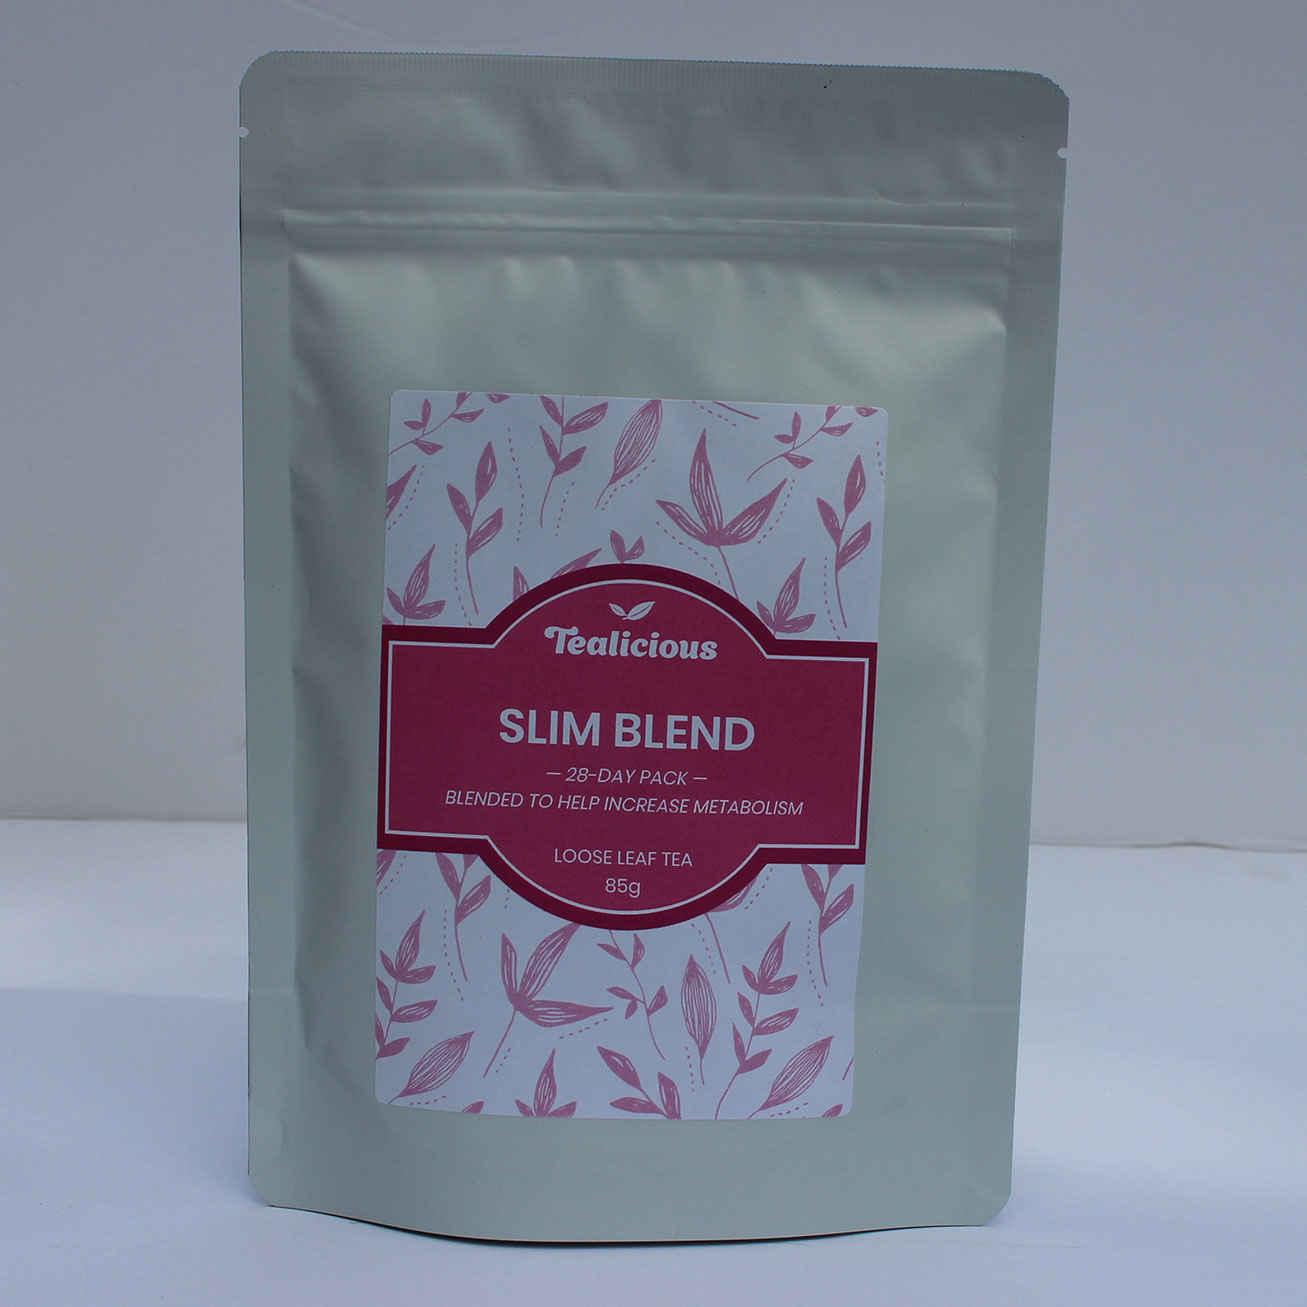 Slim Tea - Herbal Teatox - Blend of 15 Natural Herbs + Botanics – MAHE BLEU